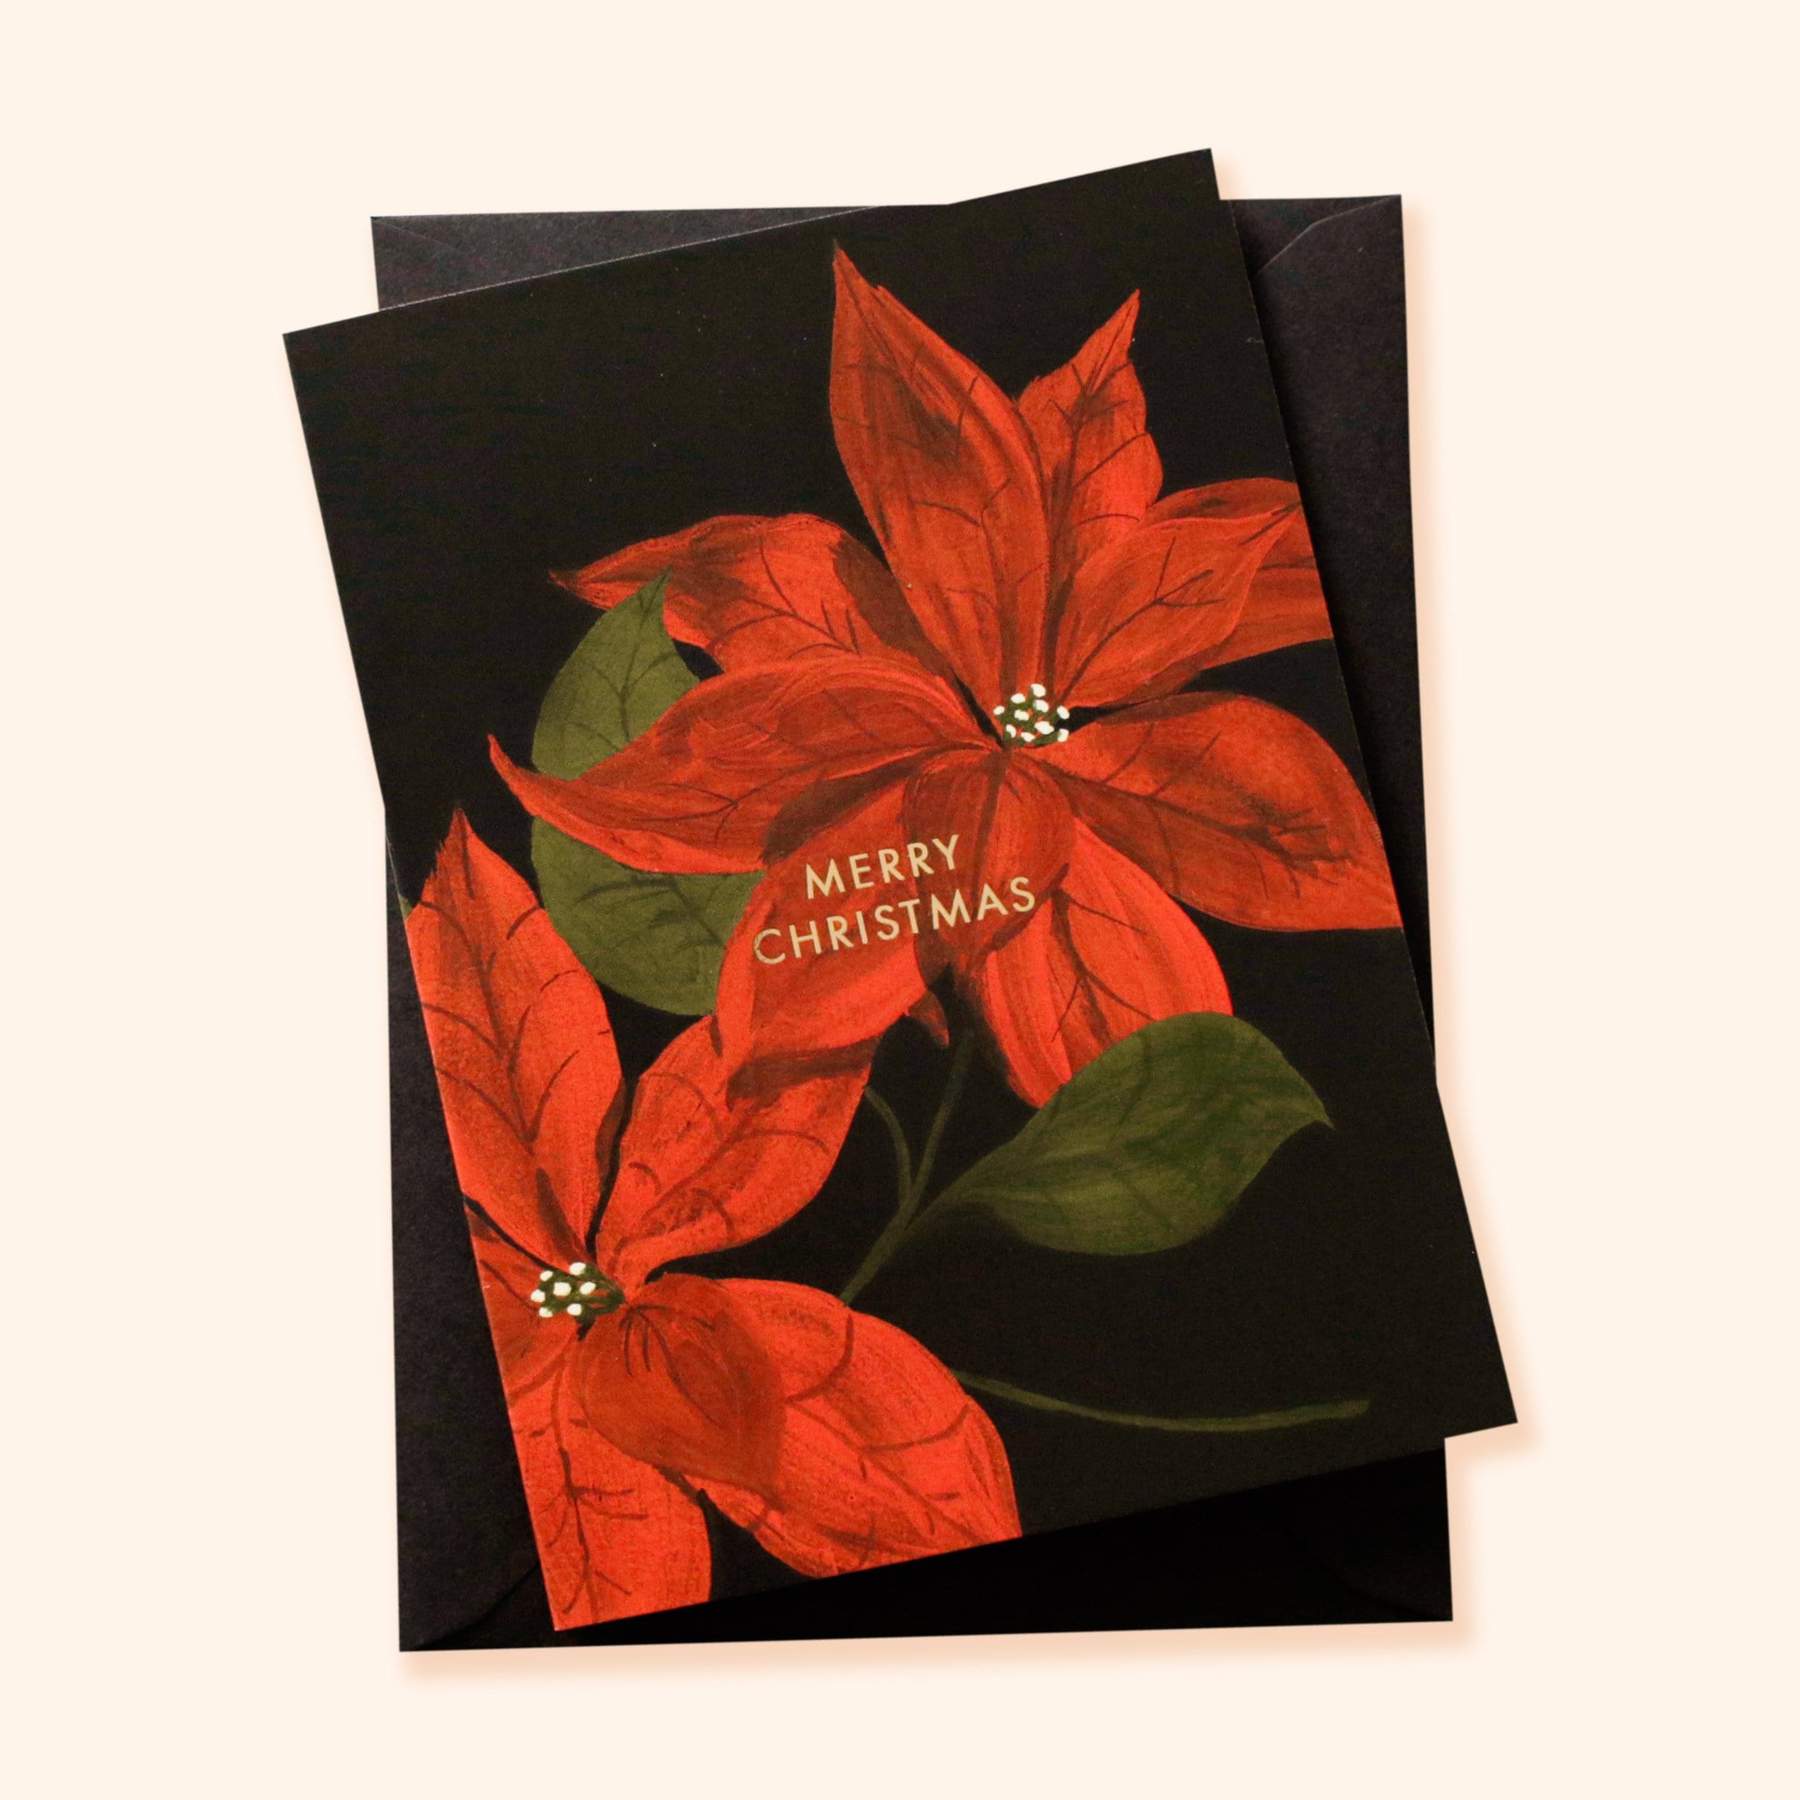 Annie Dornan Smith - Botanical Poinsettia Christmas card